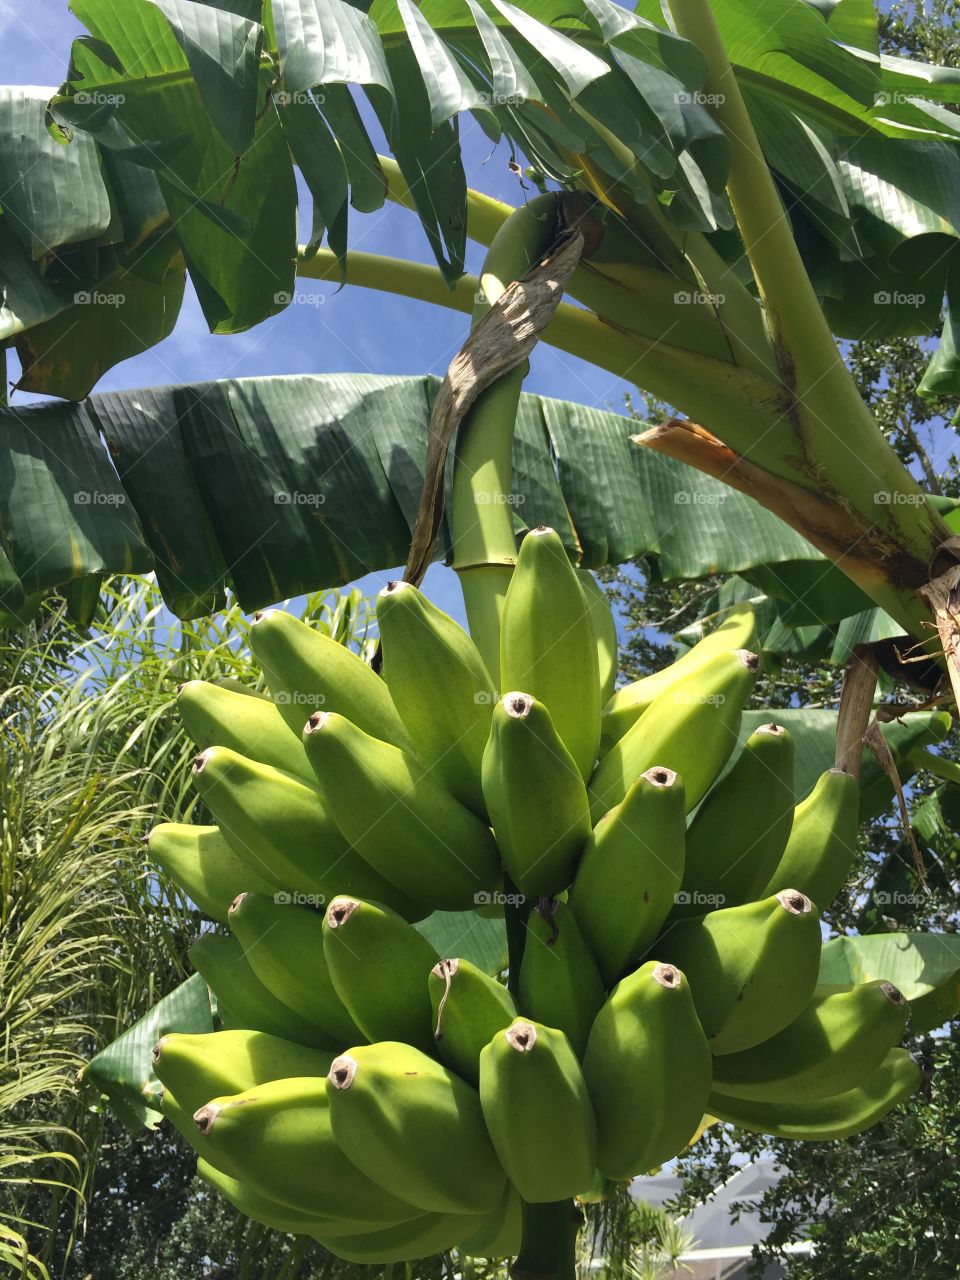 Hanging plantains